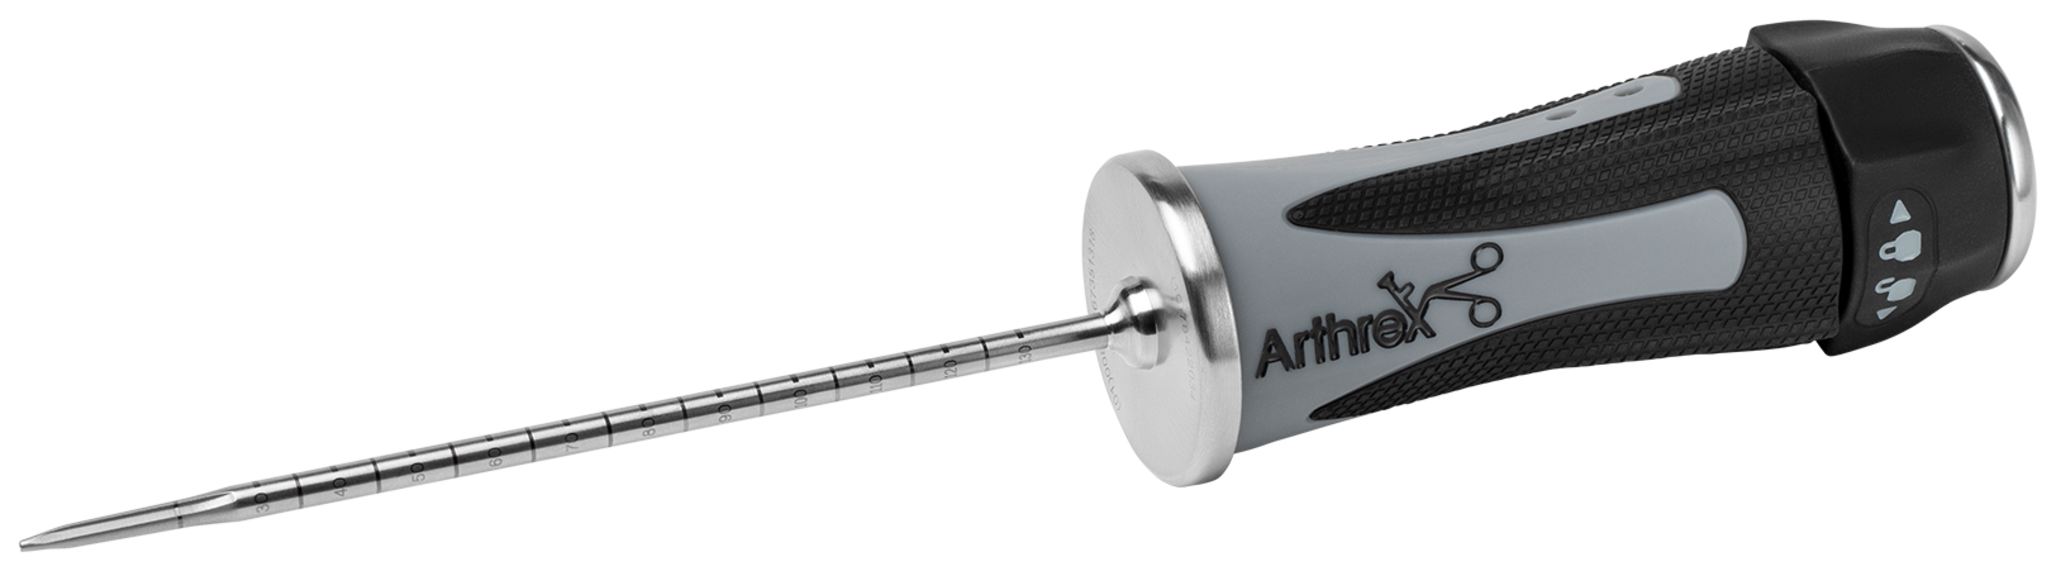 Arthrex - Fixed Handle SlapDriver for 6 mm x 20 mm Screws - AR-4019SD